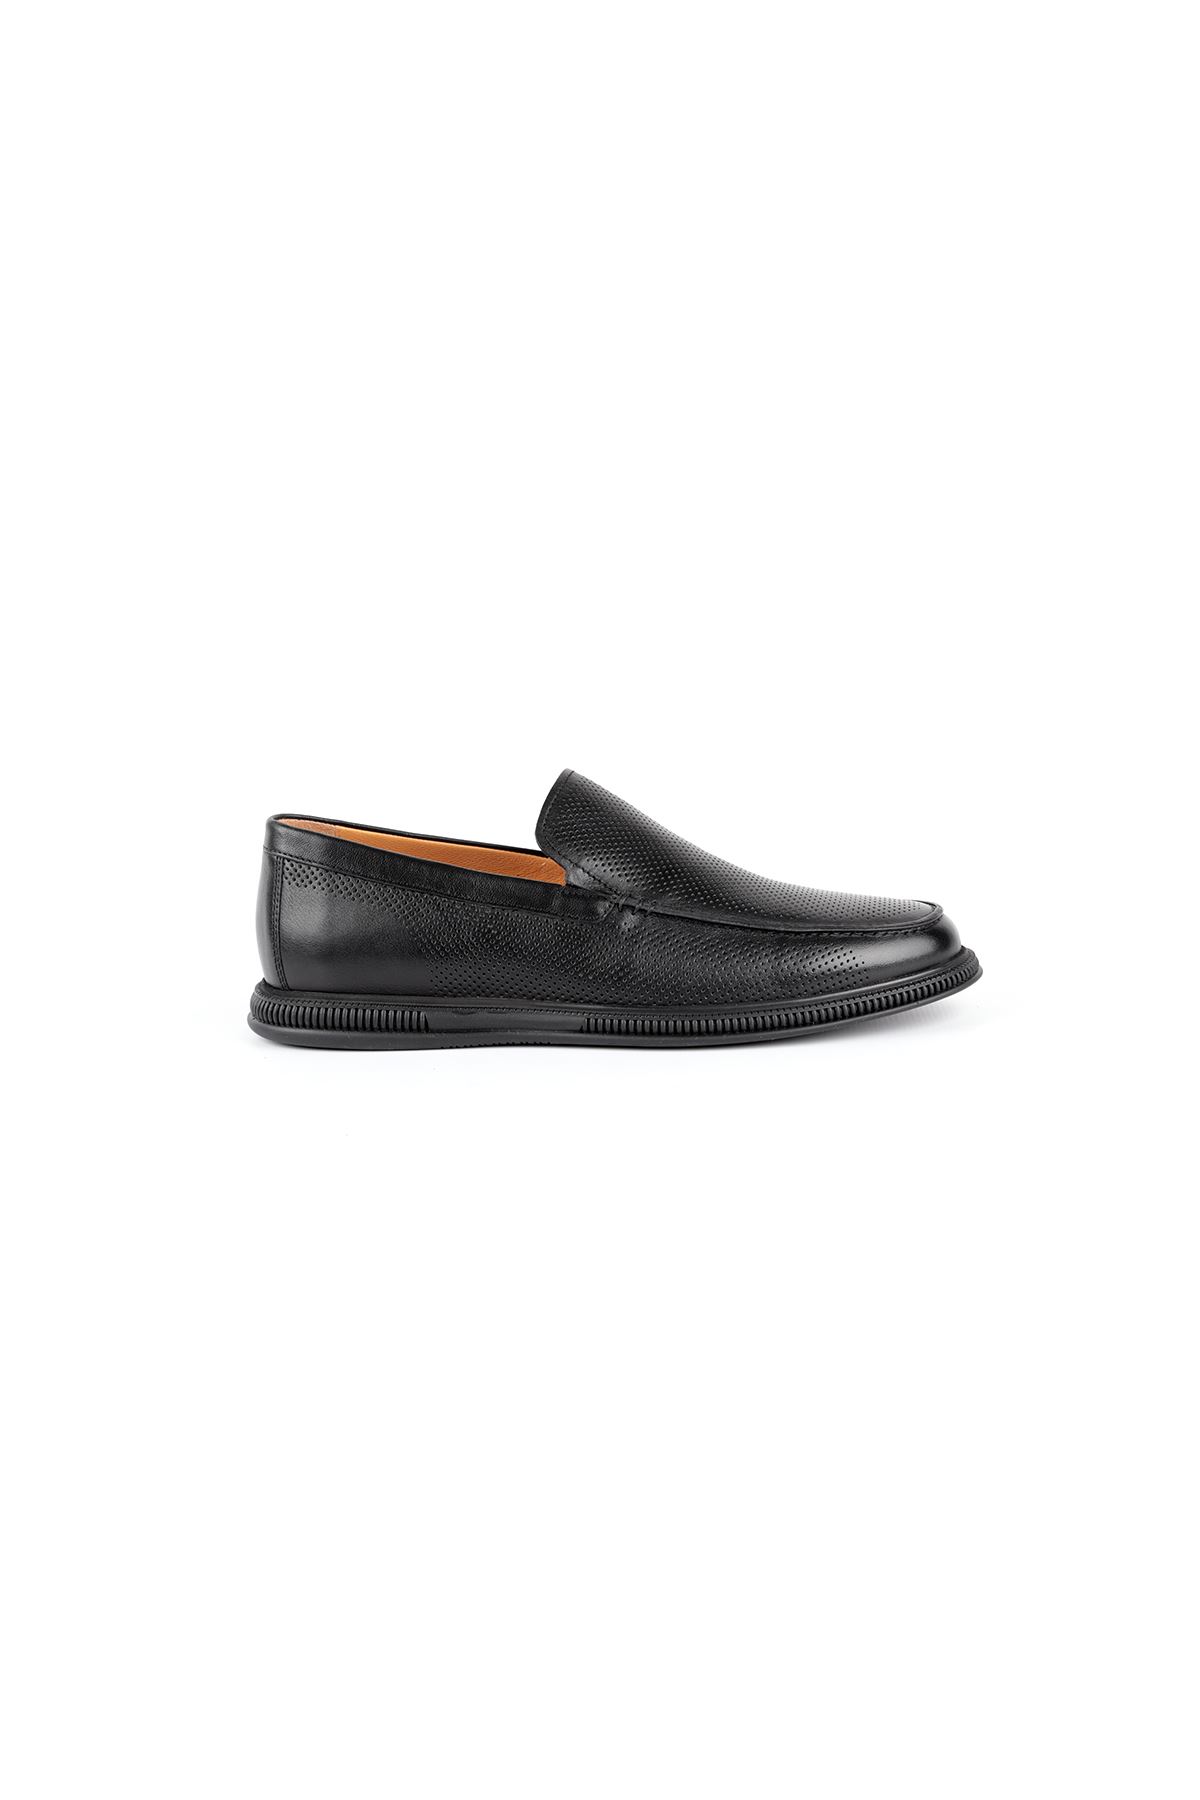 Libero L3788 Black Loafer Shoes